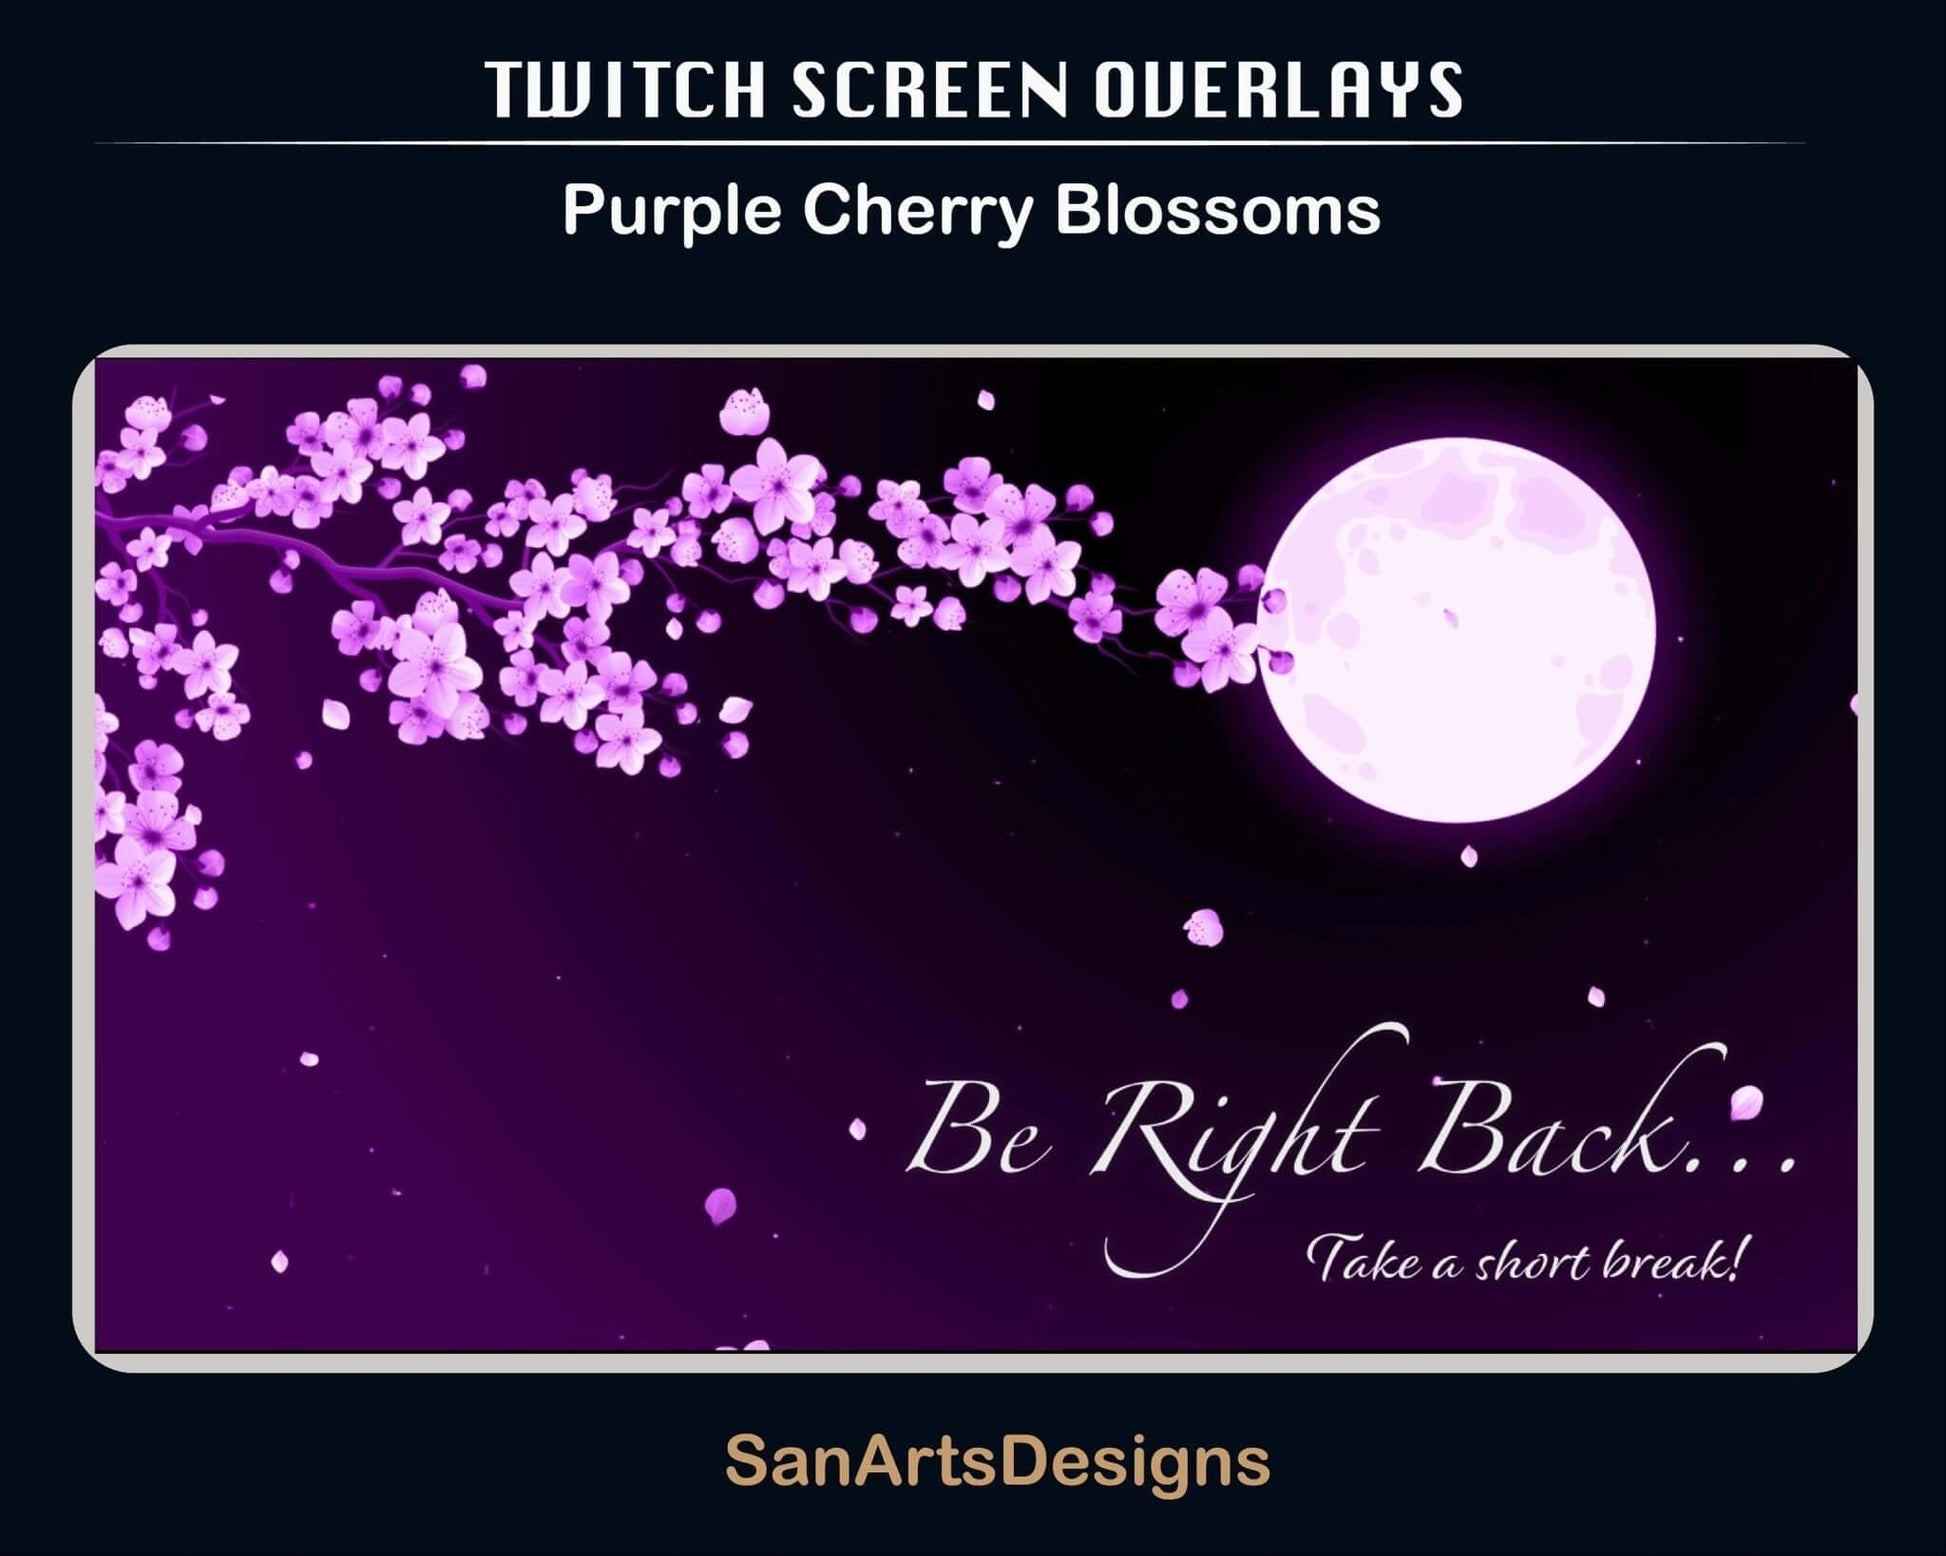 Animated Scenes Purple Sakura and Moon - Overlay - Stream K-Arts